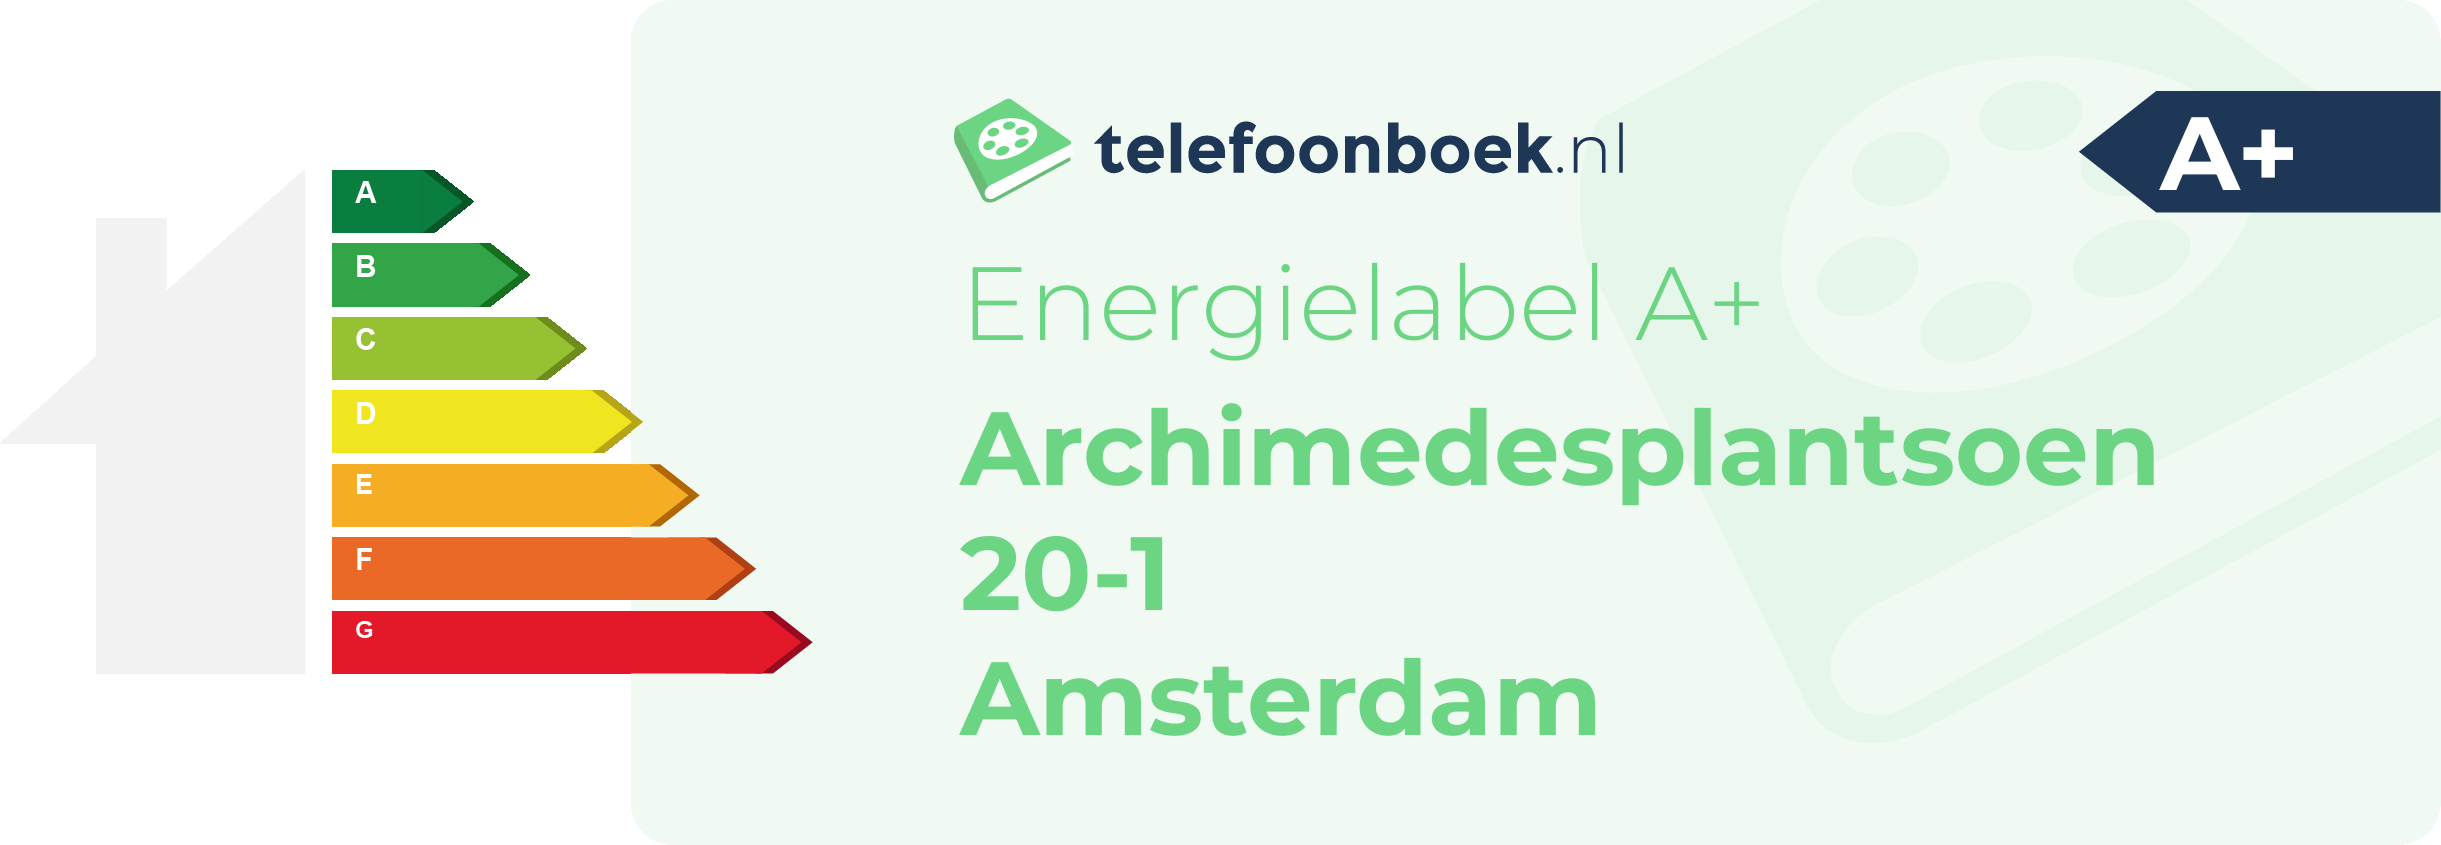 Energielabel Archimedesplantsoen 20-1 Amsterdam